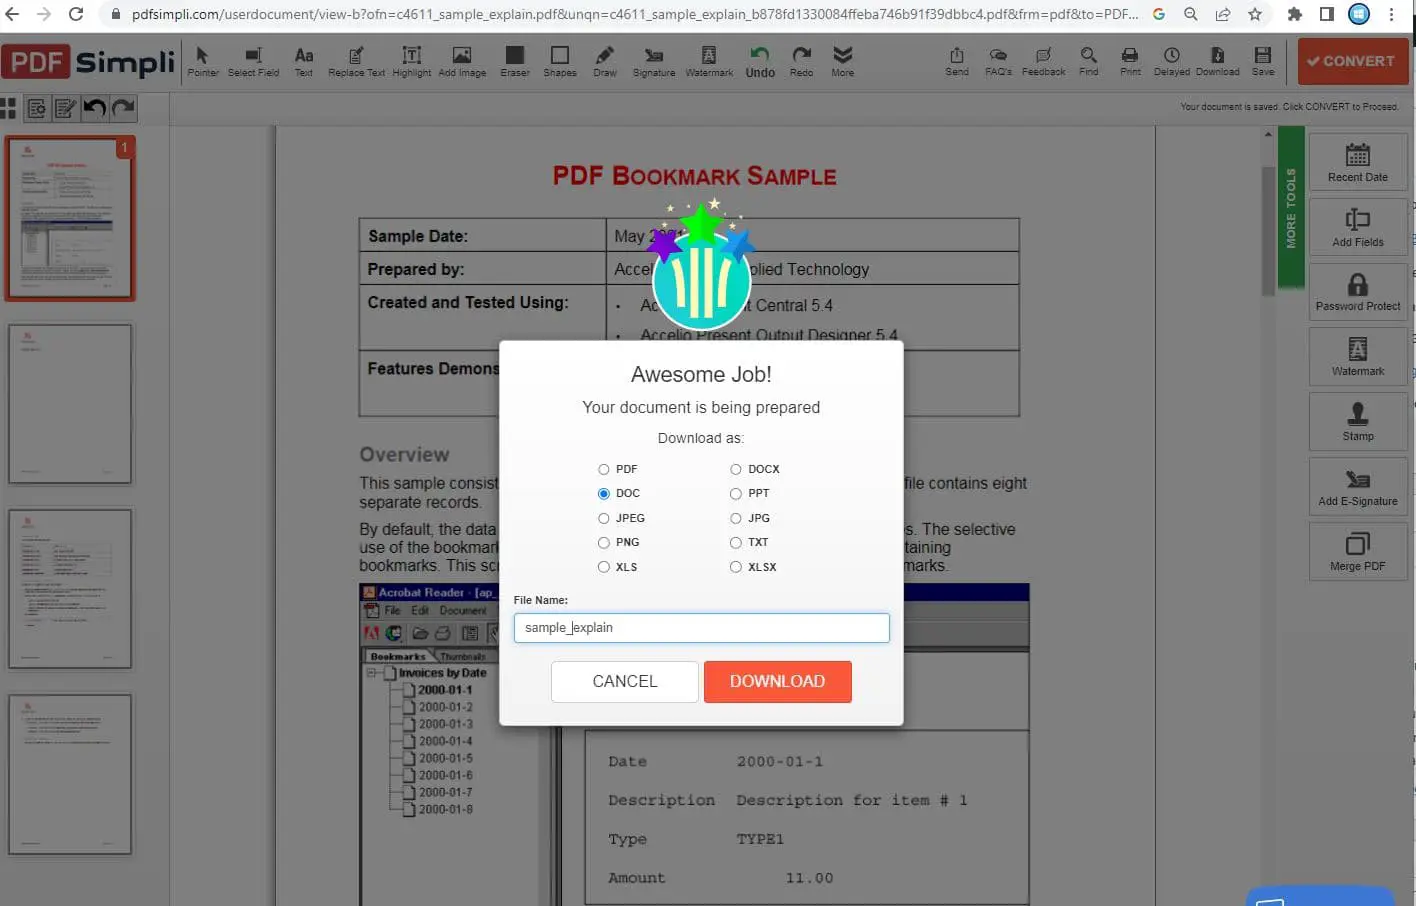 Convert option PDFsimpli